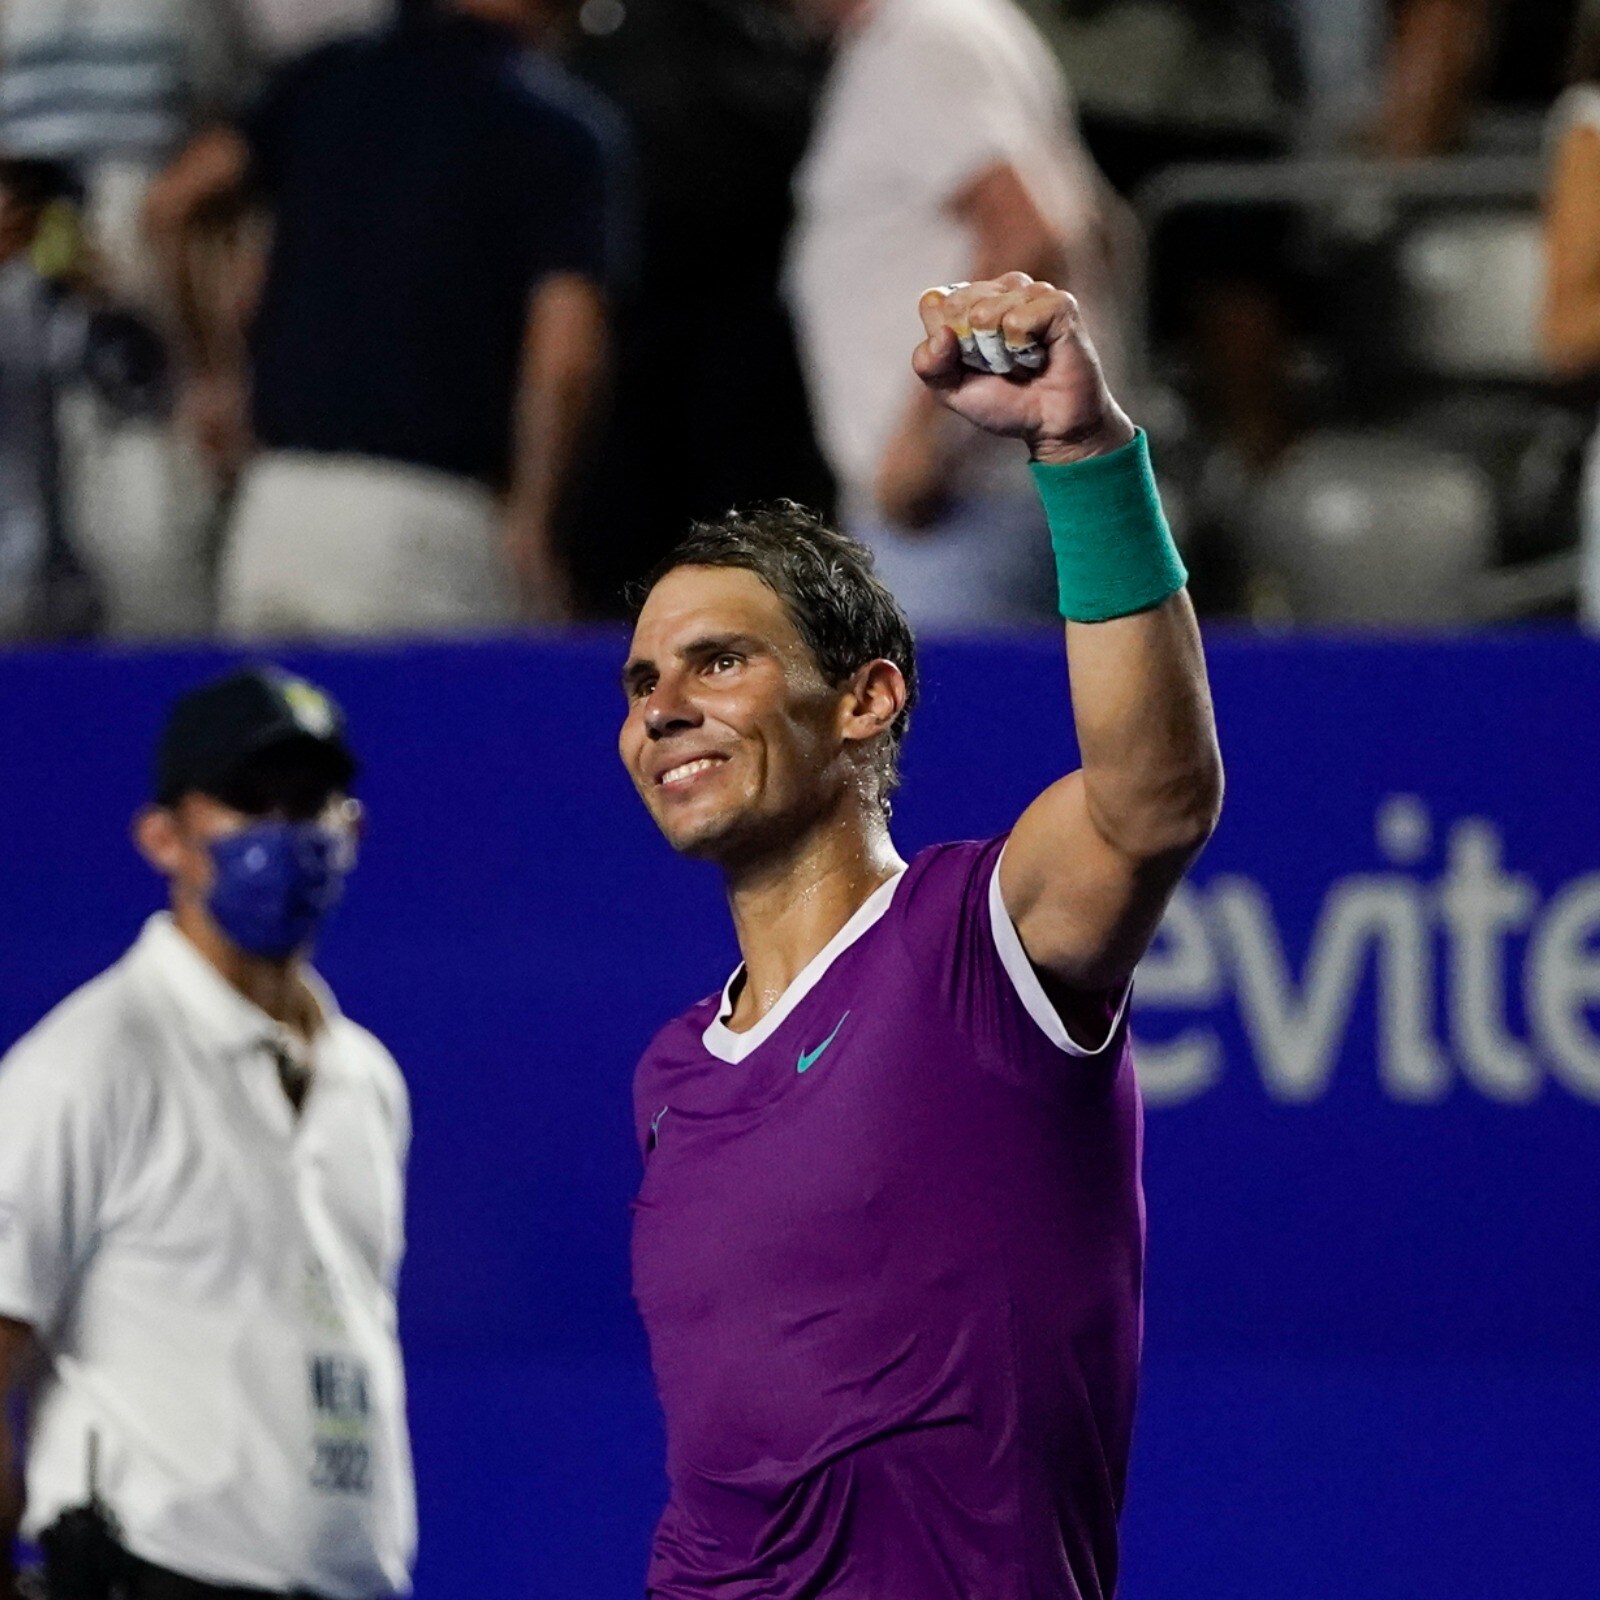 Rafael Nadal Wins Acapulco Opener, First Match Since Australian Open Triumph